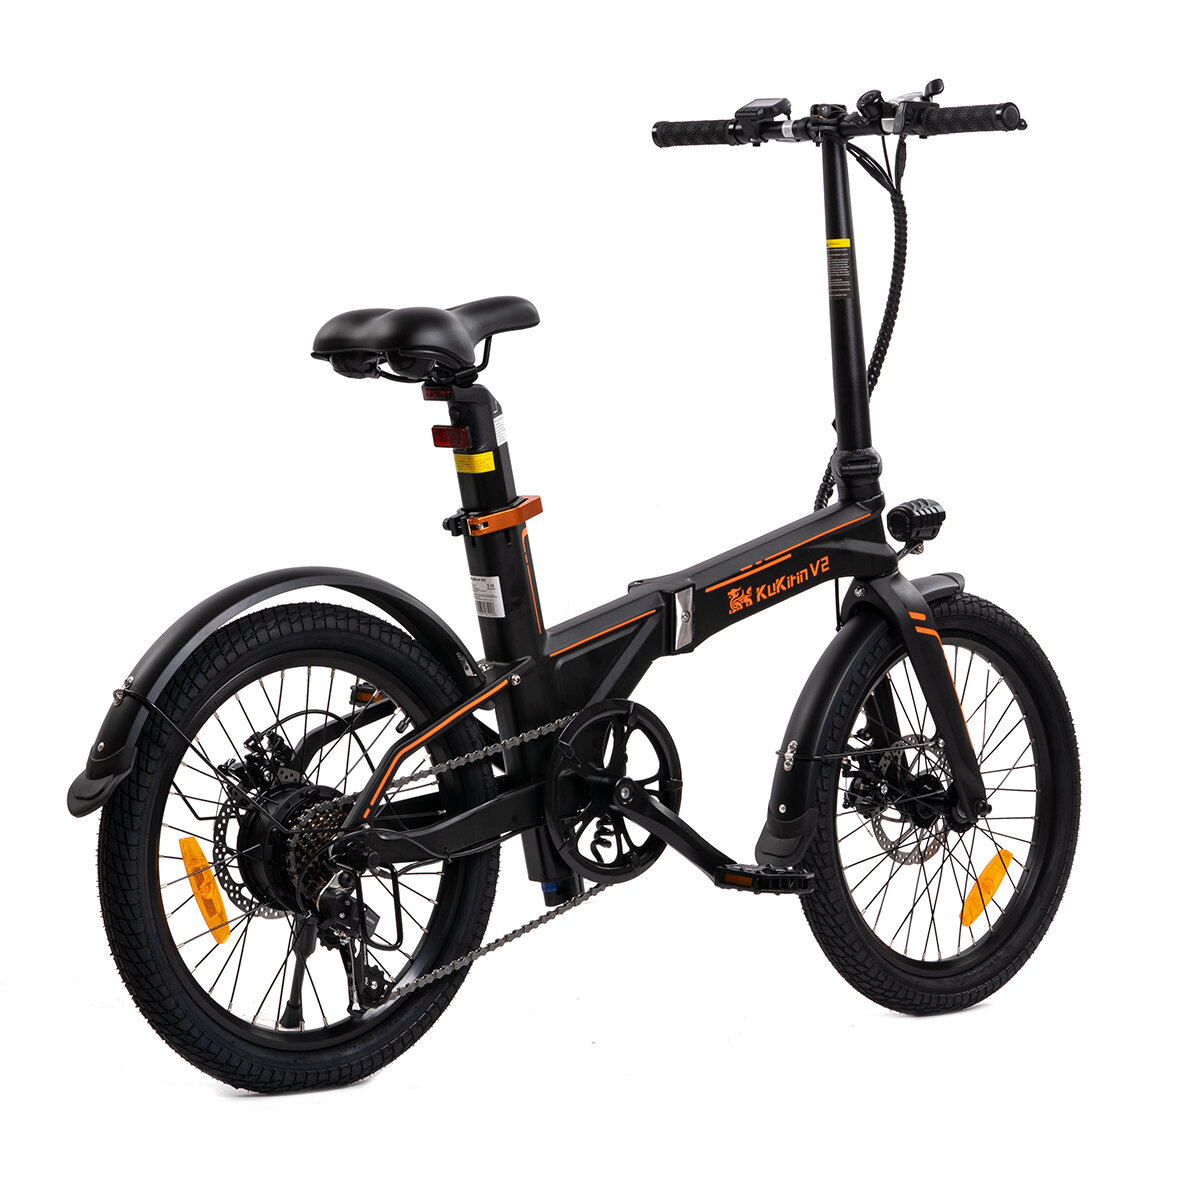 [EU DIRECT] Kukirin V2 City Electric Bike 36V 7.5Ah 250W Electric Bicycle 20 Inch 45KM Mileage Range Max Load 120KG City E Bike